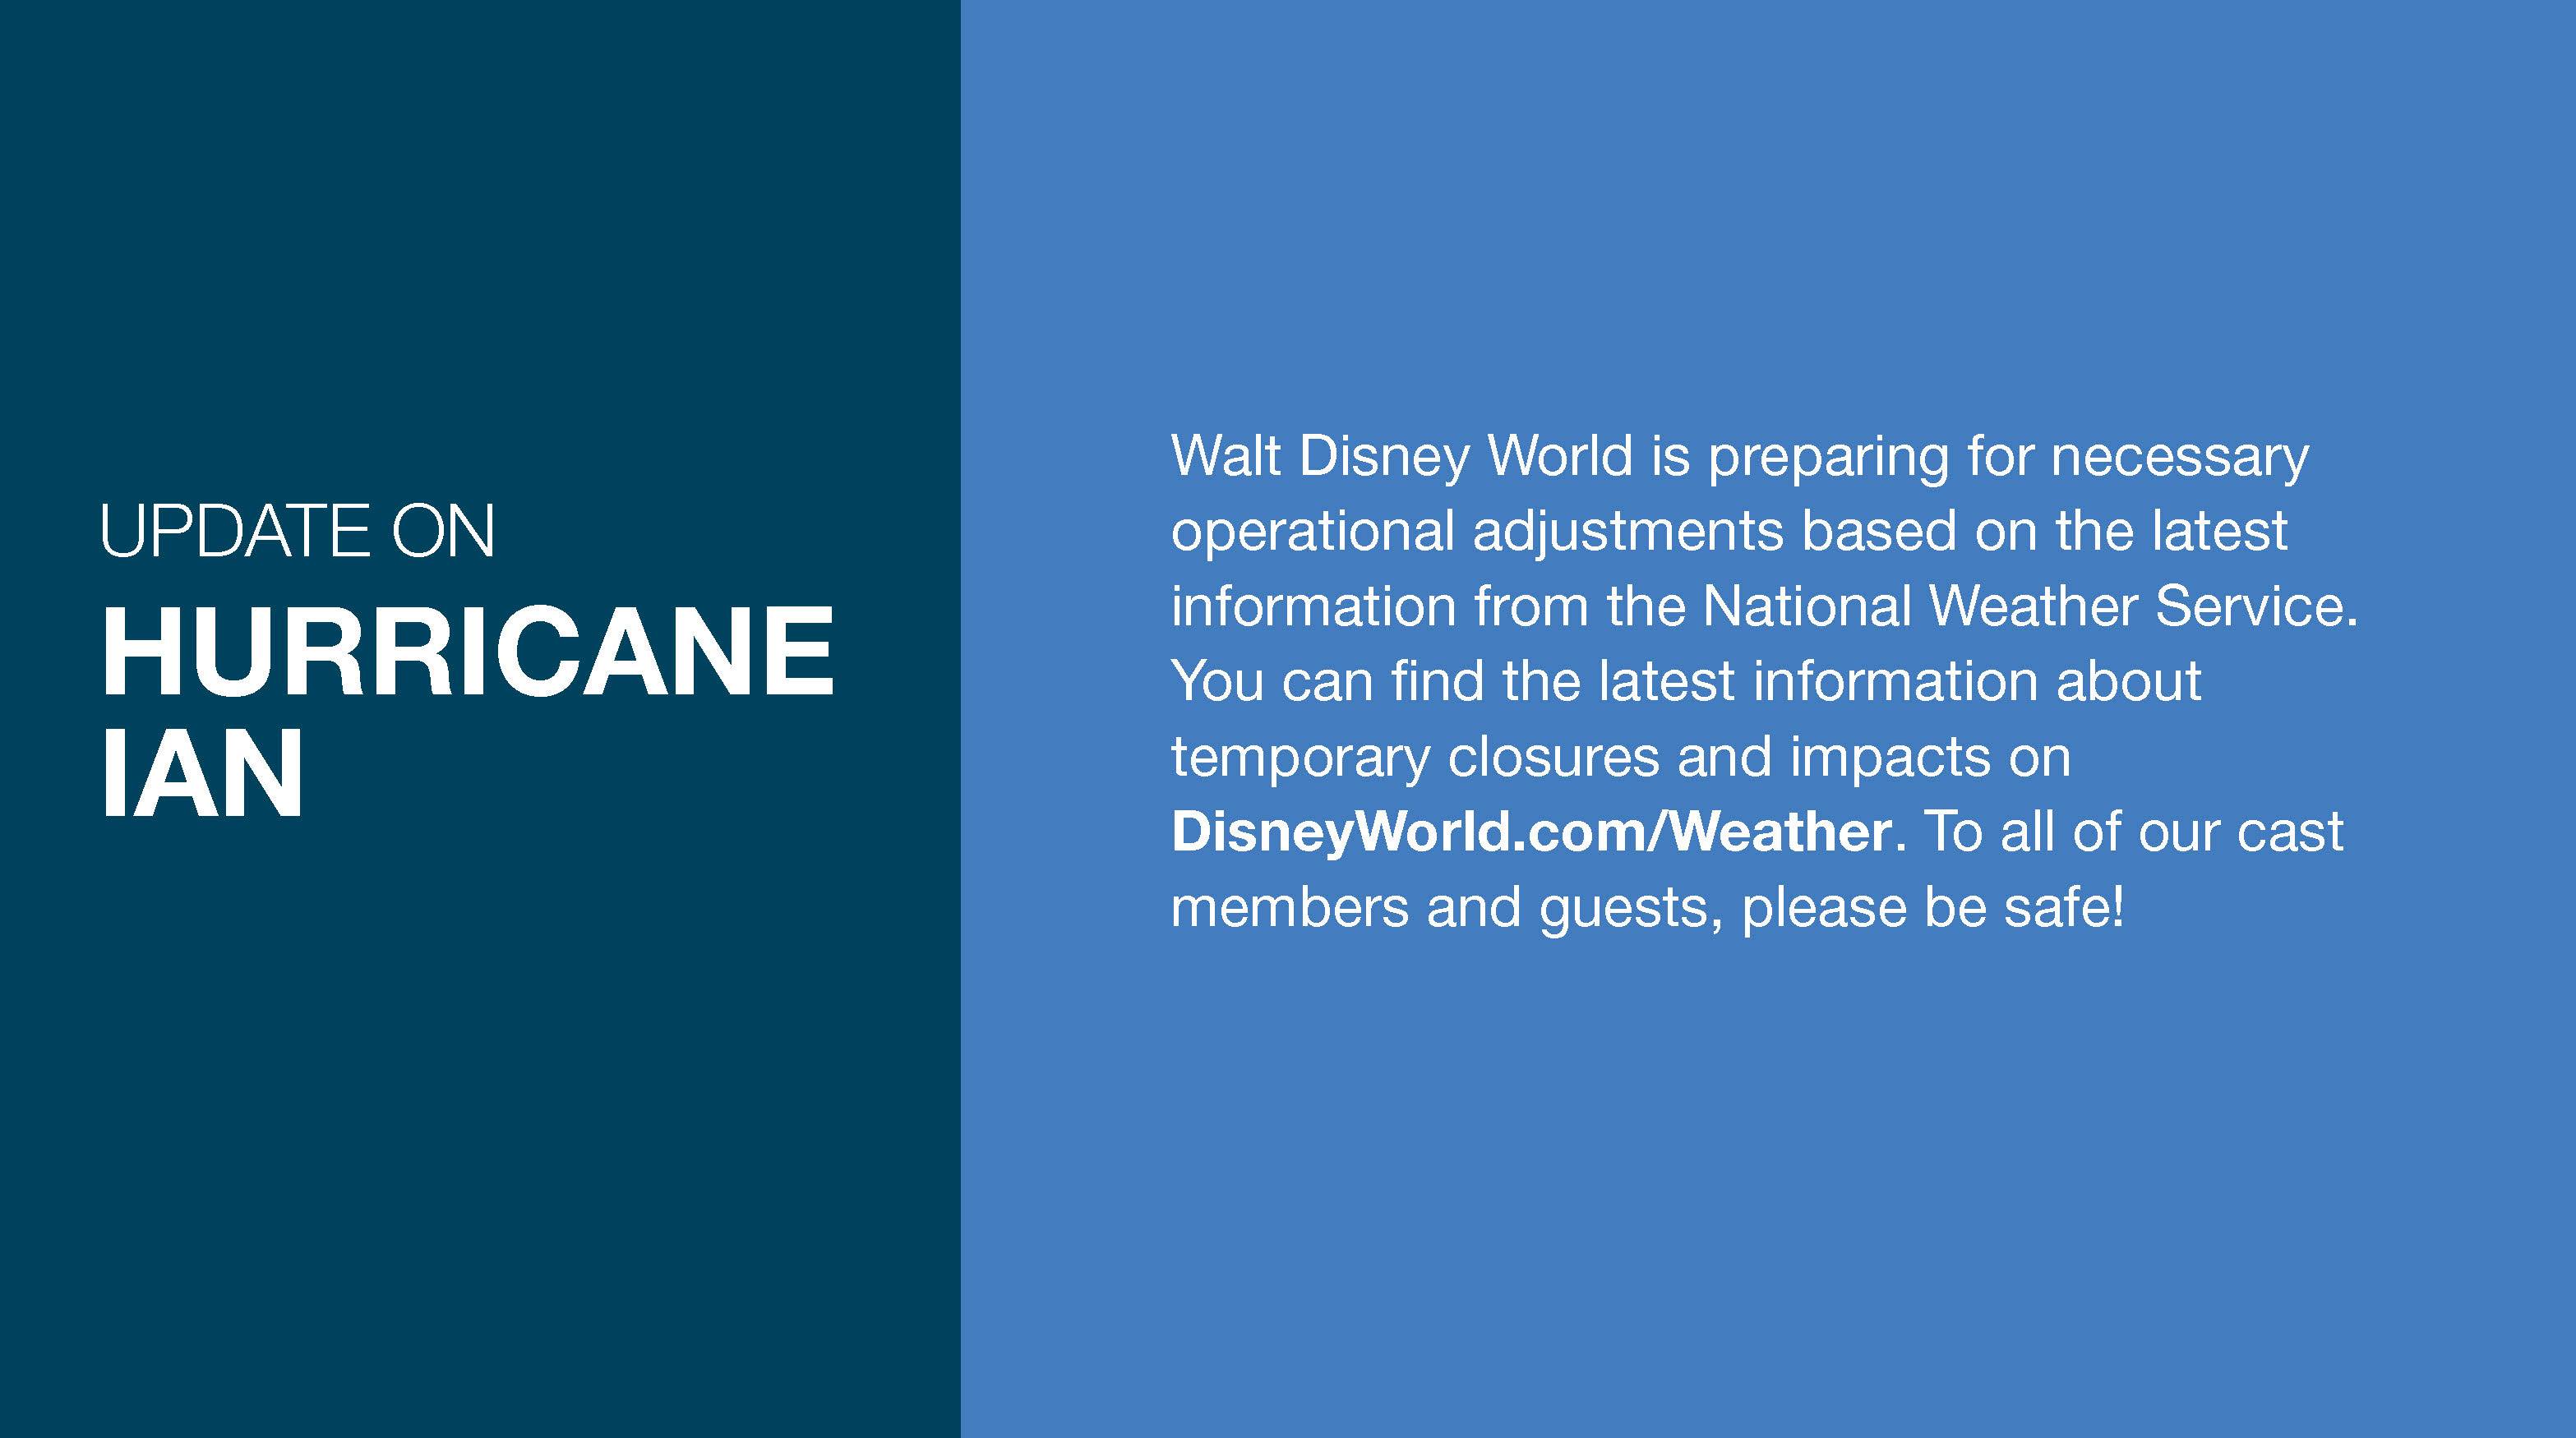 Disney statement on Hurricane Ian